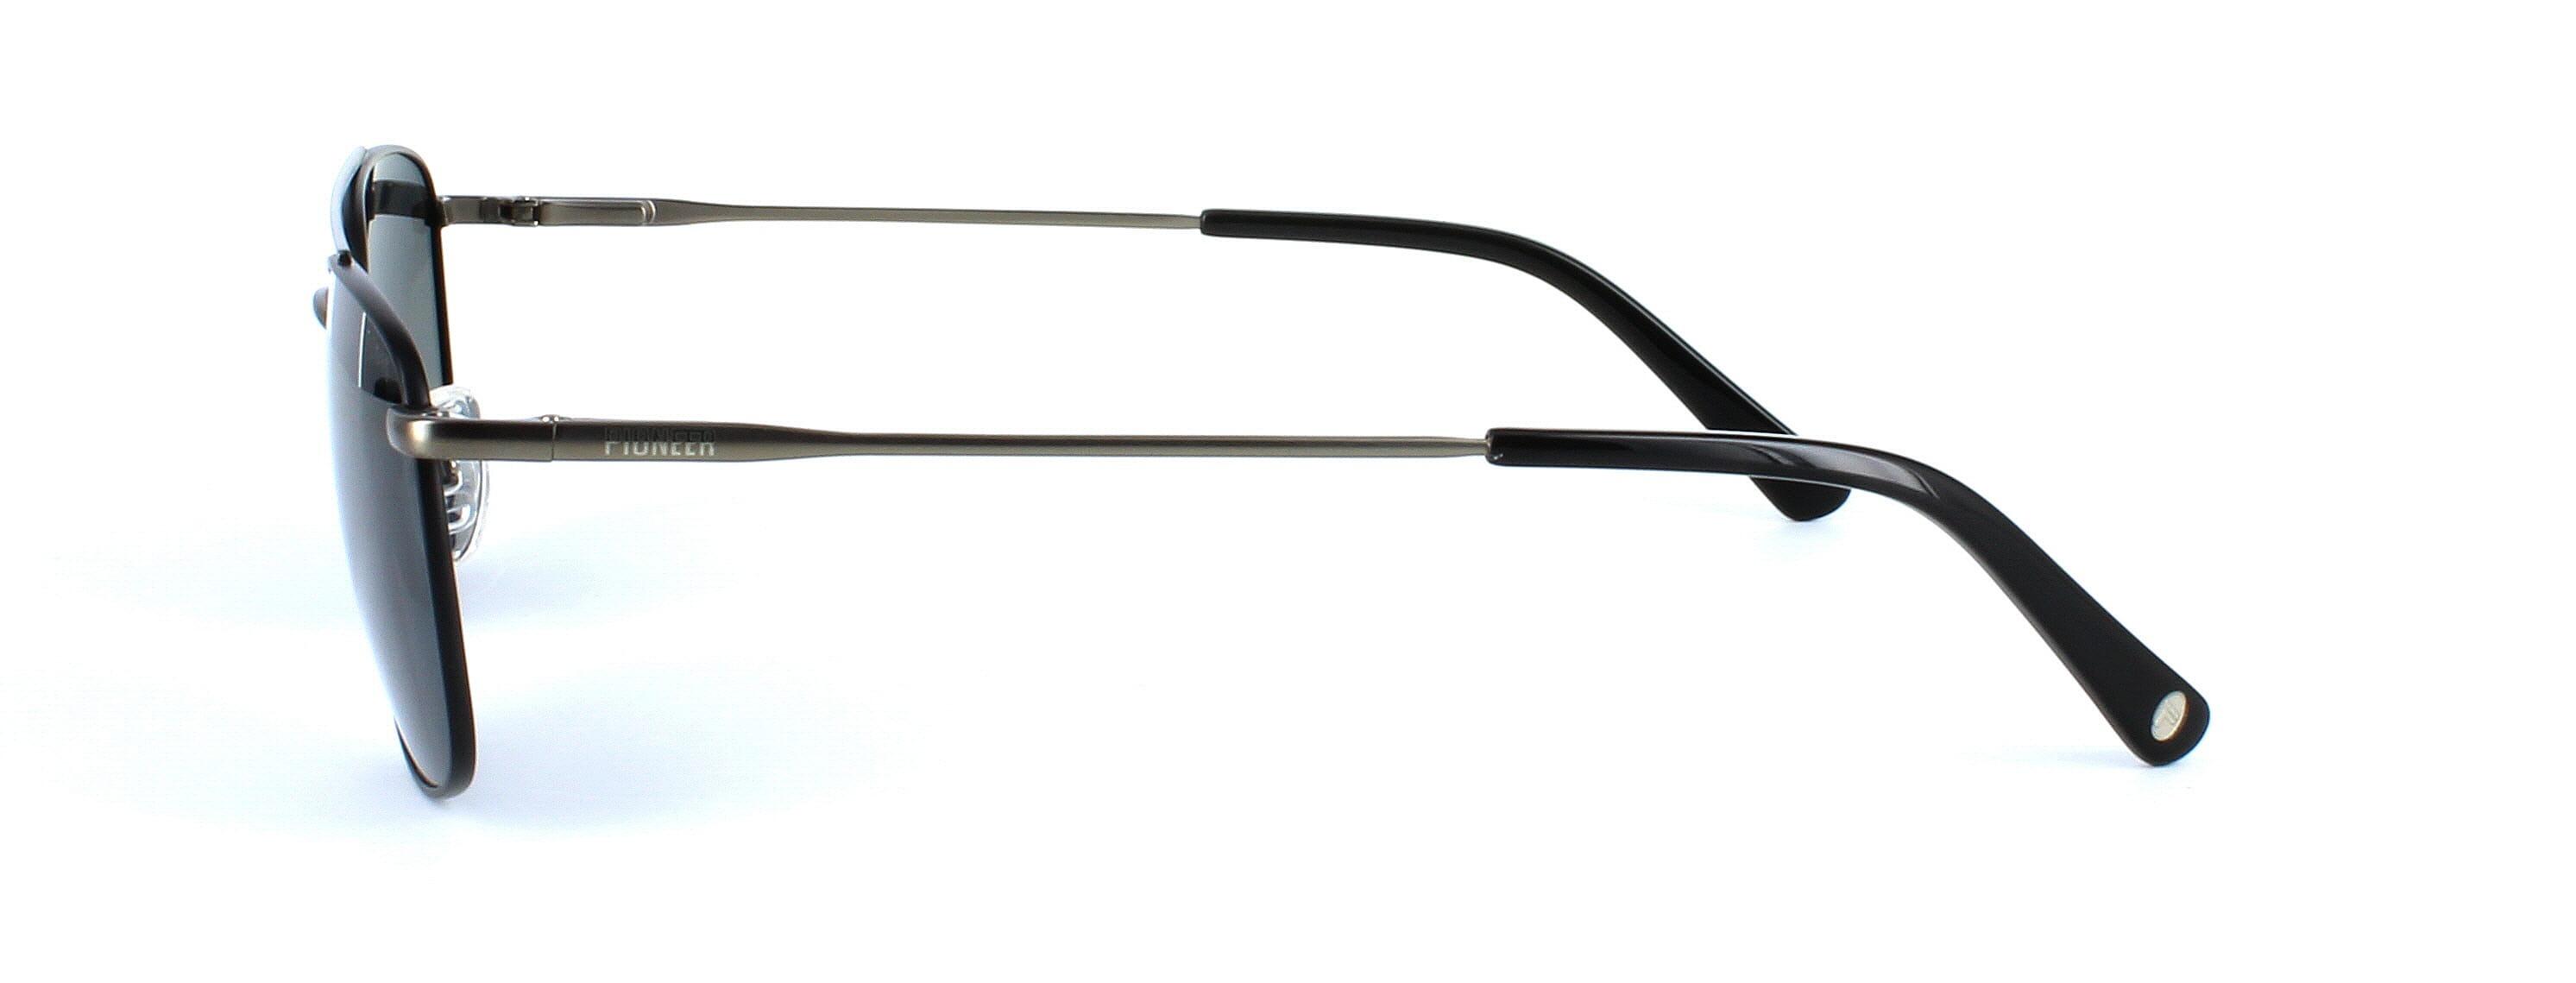 Carlo - Unisex 2-tone aviator style sunglasses here in black and gunmetal - image view 5